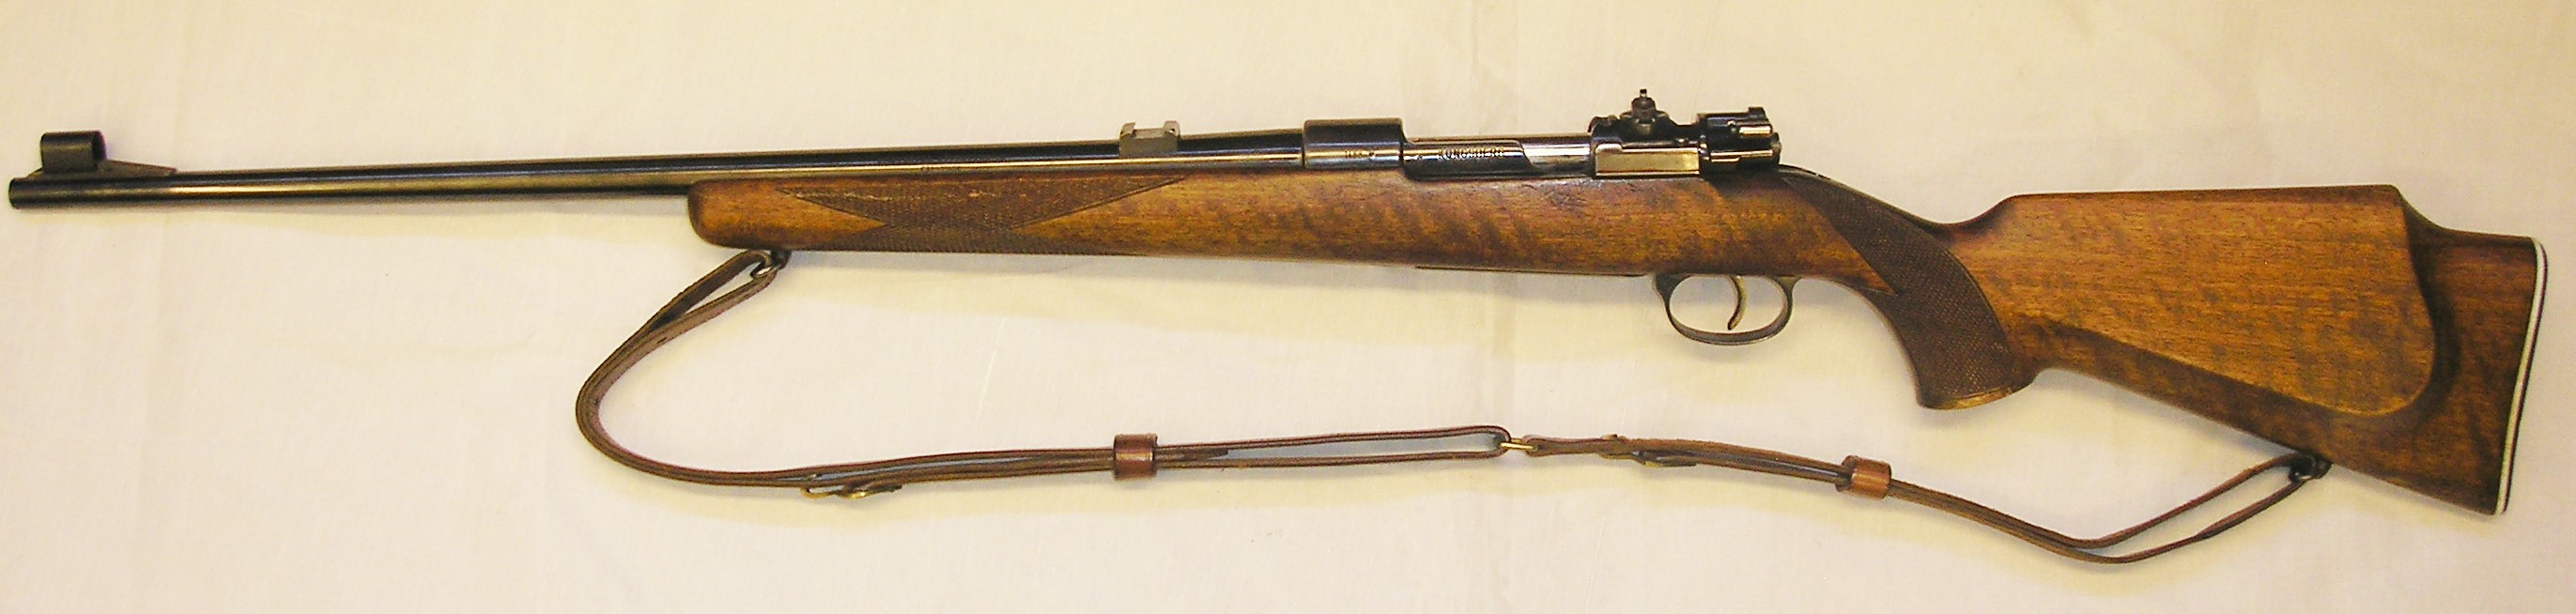 ./guns/rifle/bilder/Rifle-Kongsberg-Mauser-M62-1468-2.JPG